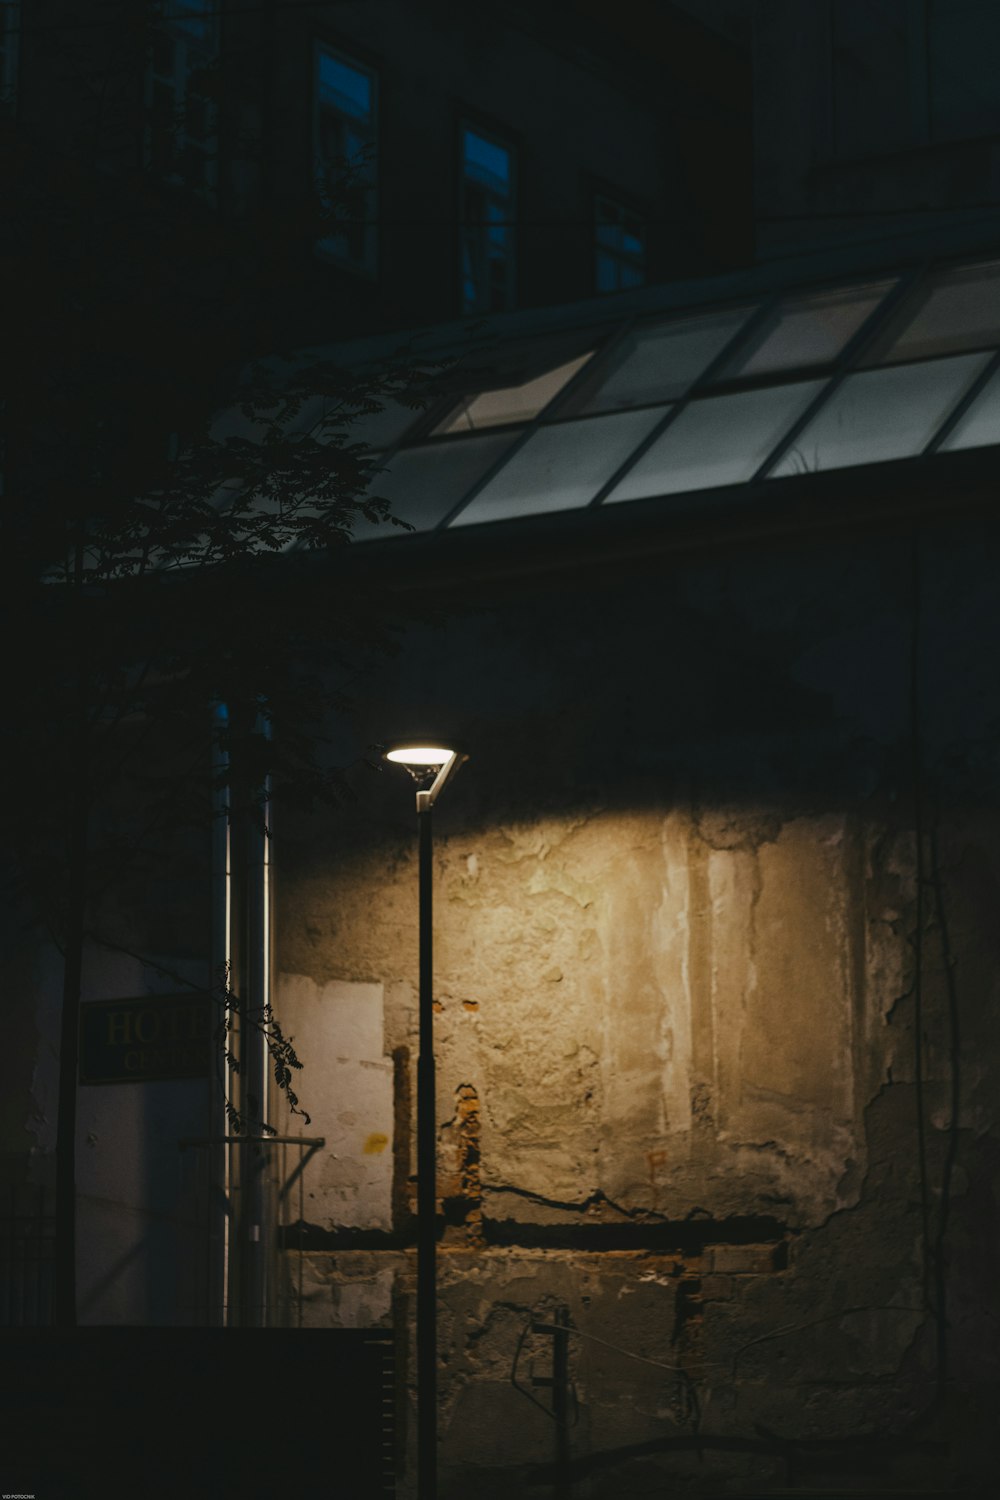 a street light sitting next to a building